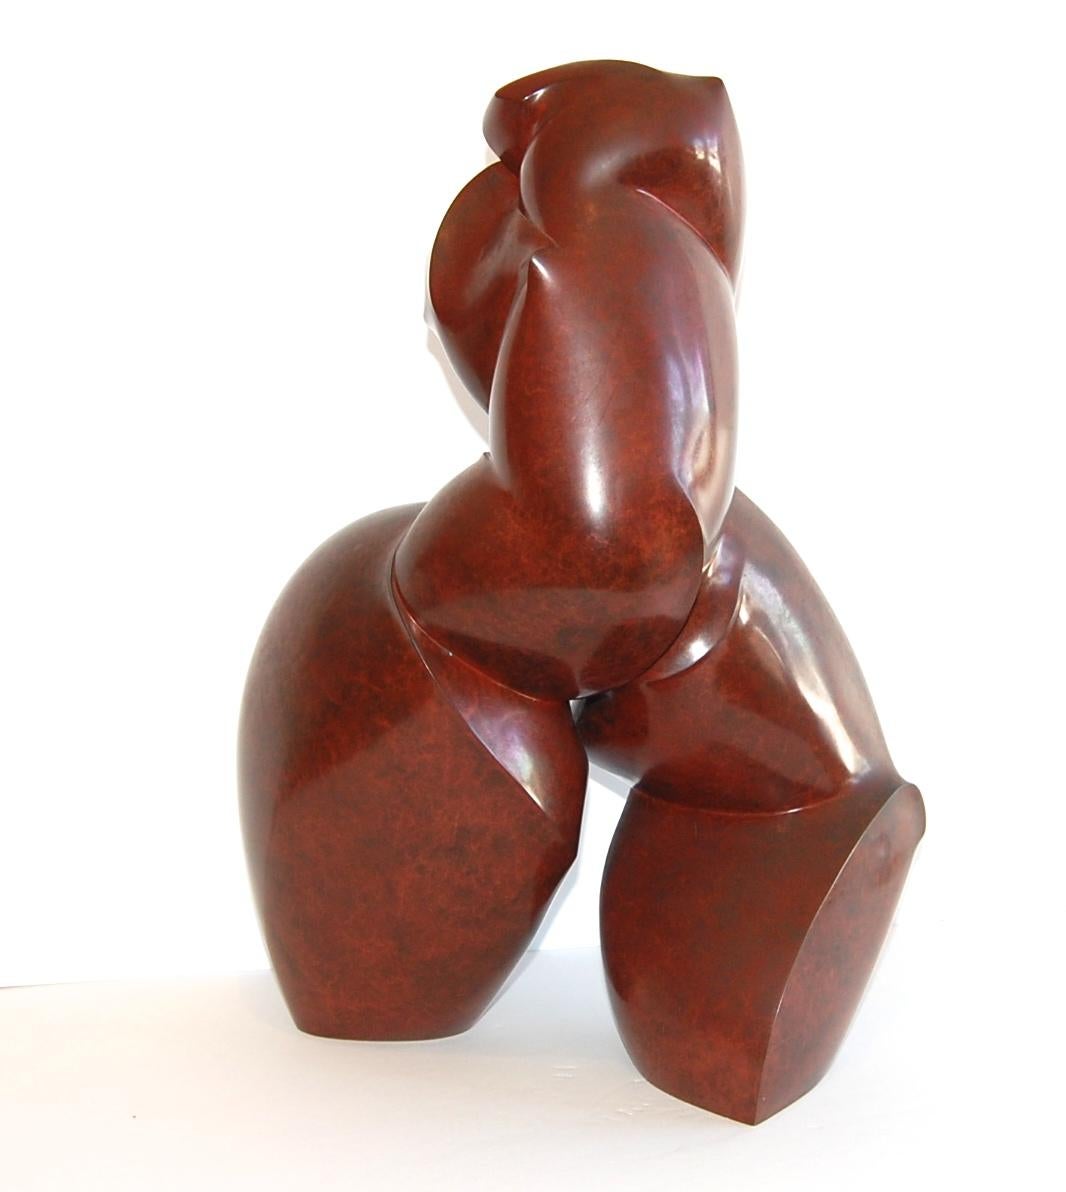 Dominique Polles  Nude Sculpture – Dominique Polies Nackte Bronzeskulptur